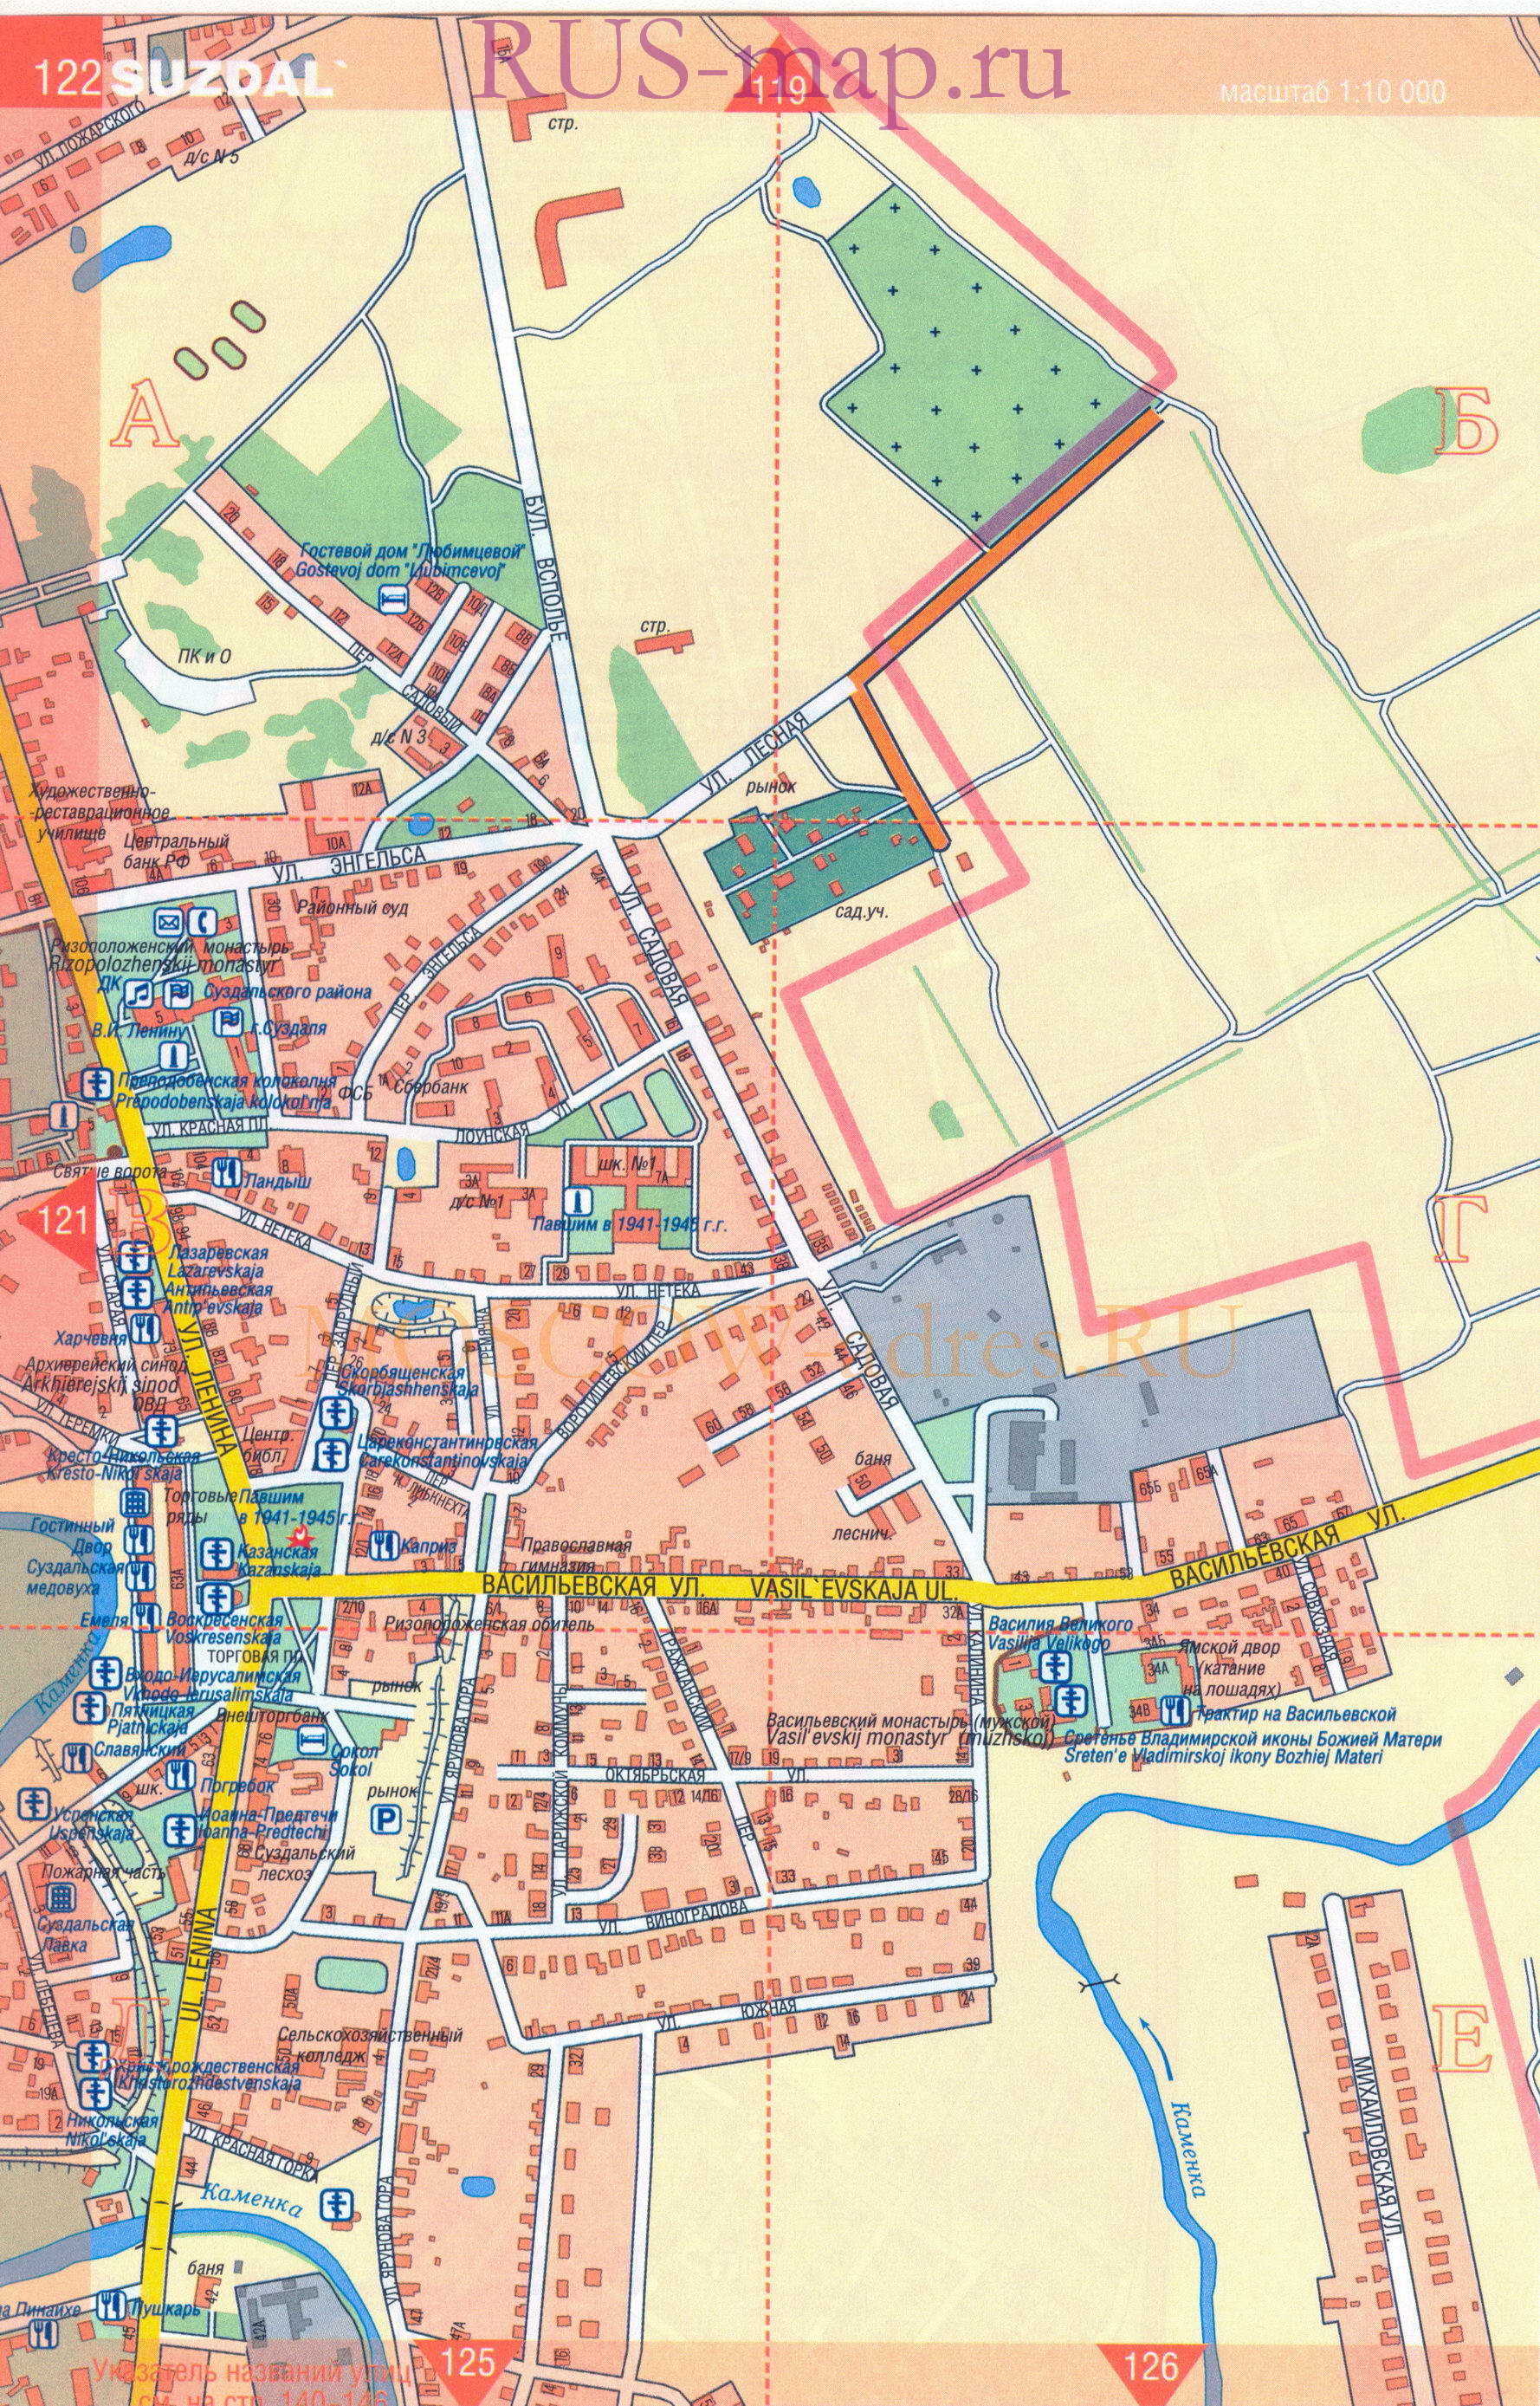 Суздаль. Крупномасштабная карта города Суздаль масштаба 1см:100м, показаны все церкви, музеи, гостиницы, B1 - 